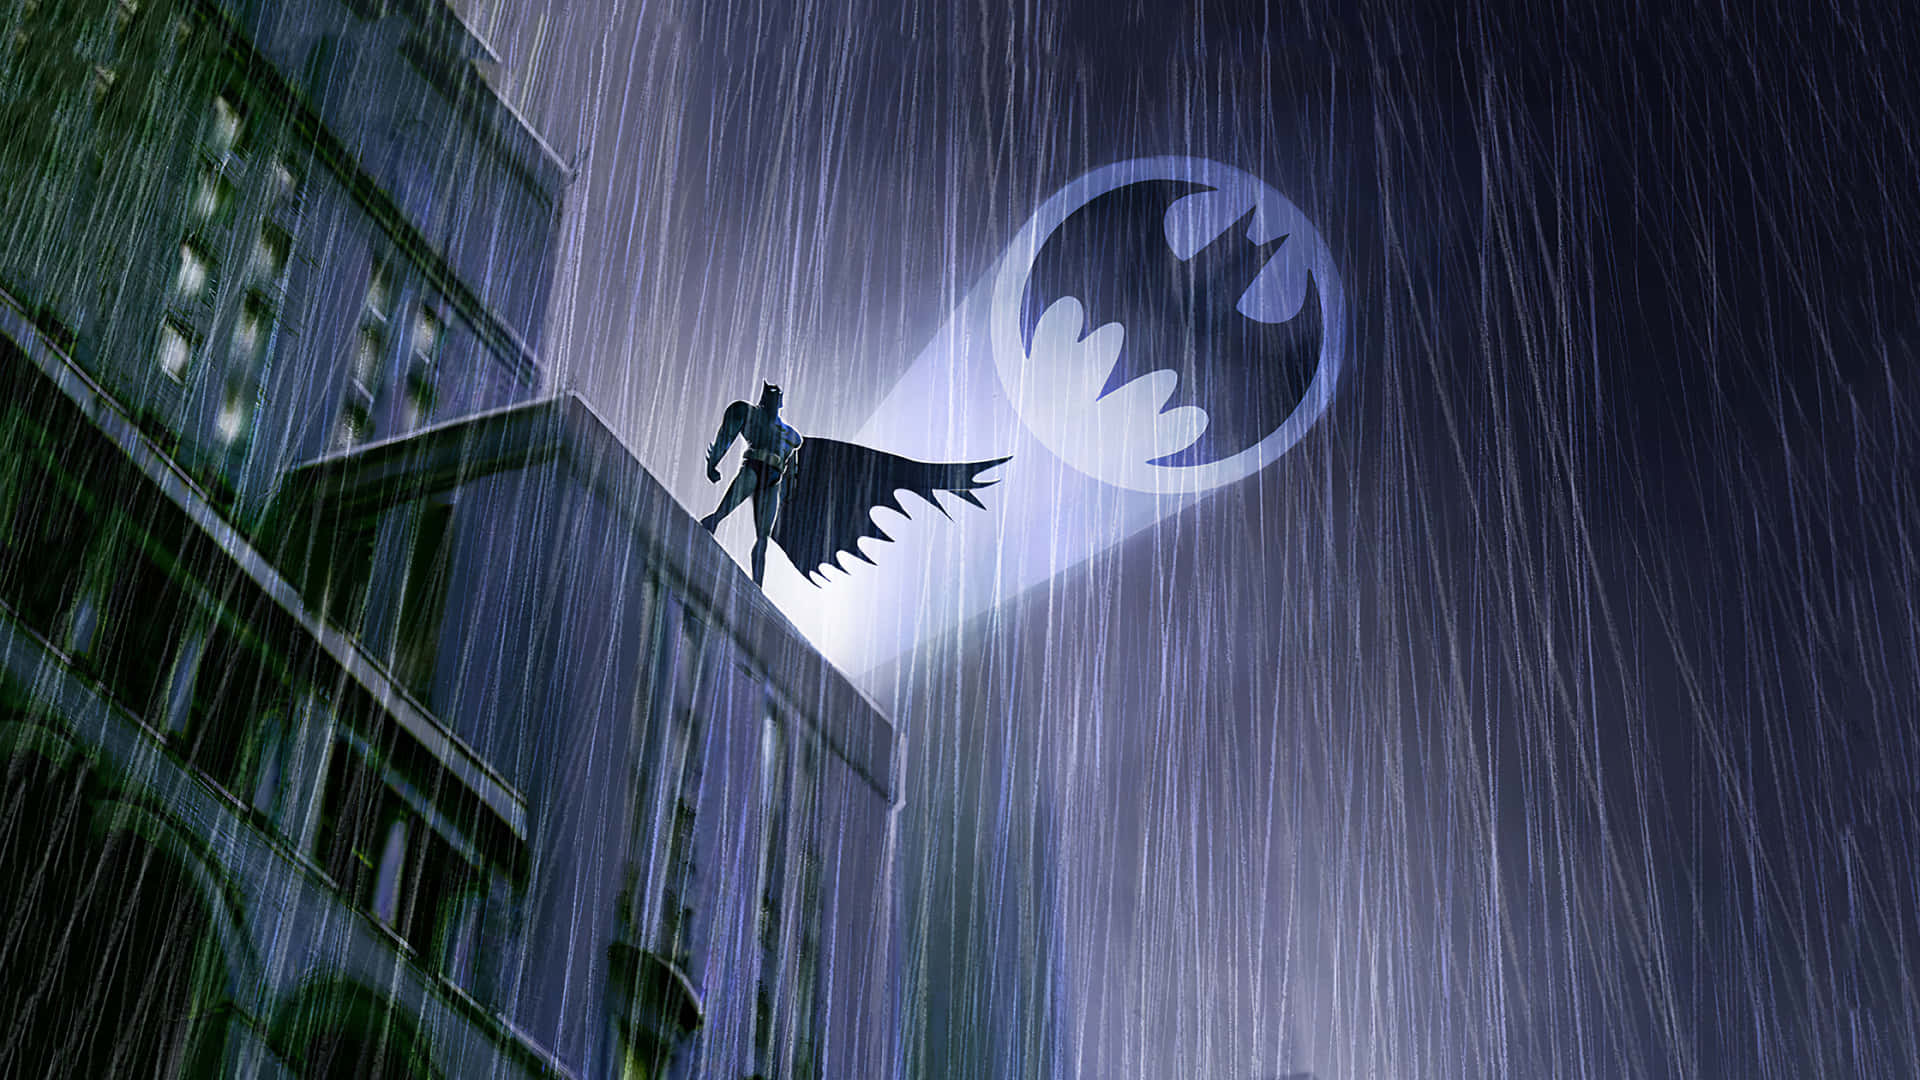 Download Epic Bat Signal in a Dark Gotham Night Sky Wallpaper ...